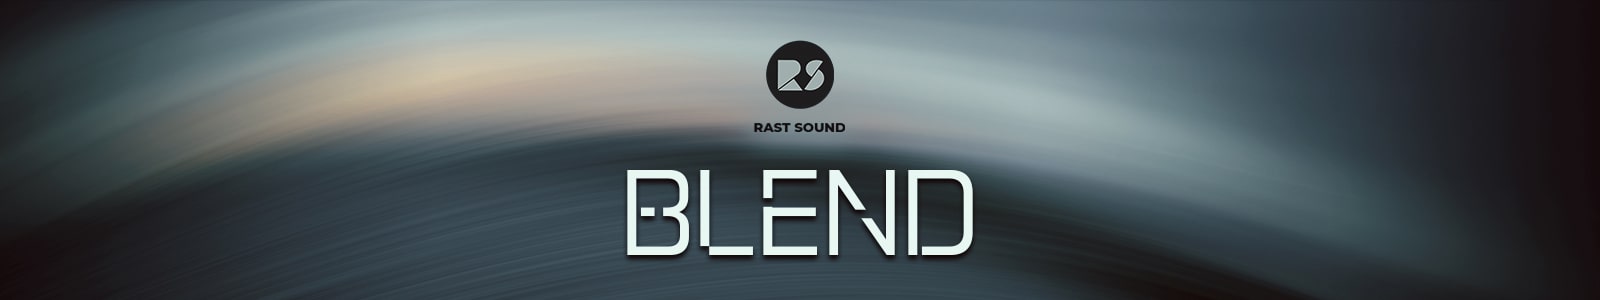 blend by rast sound